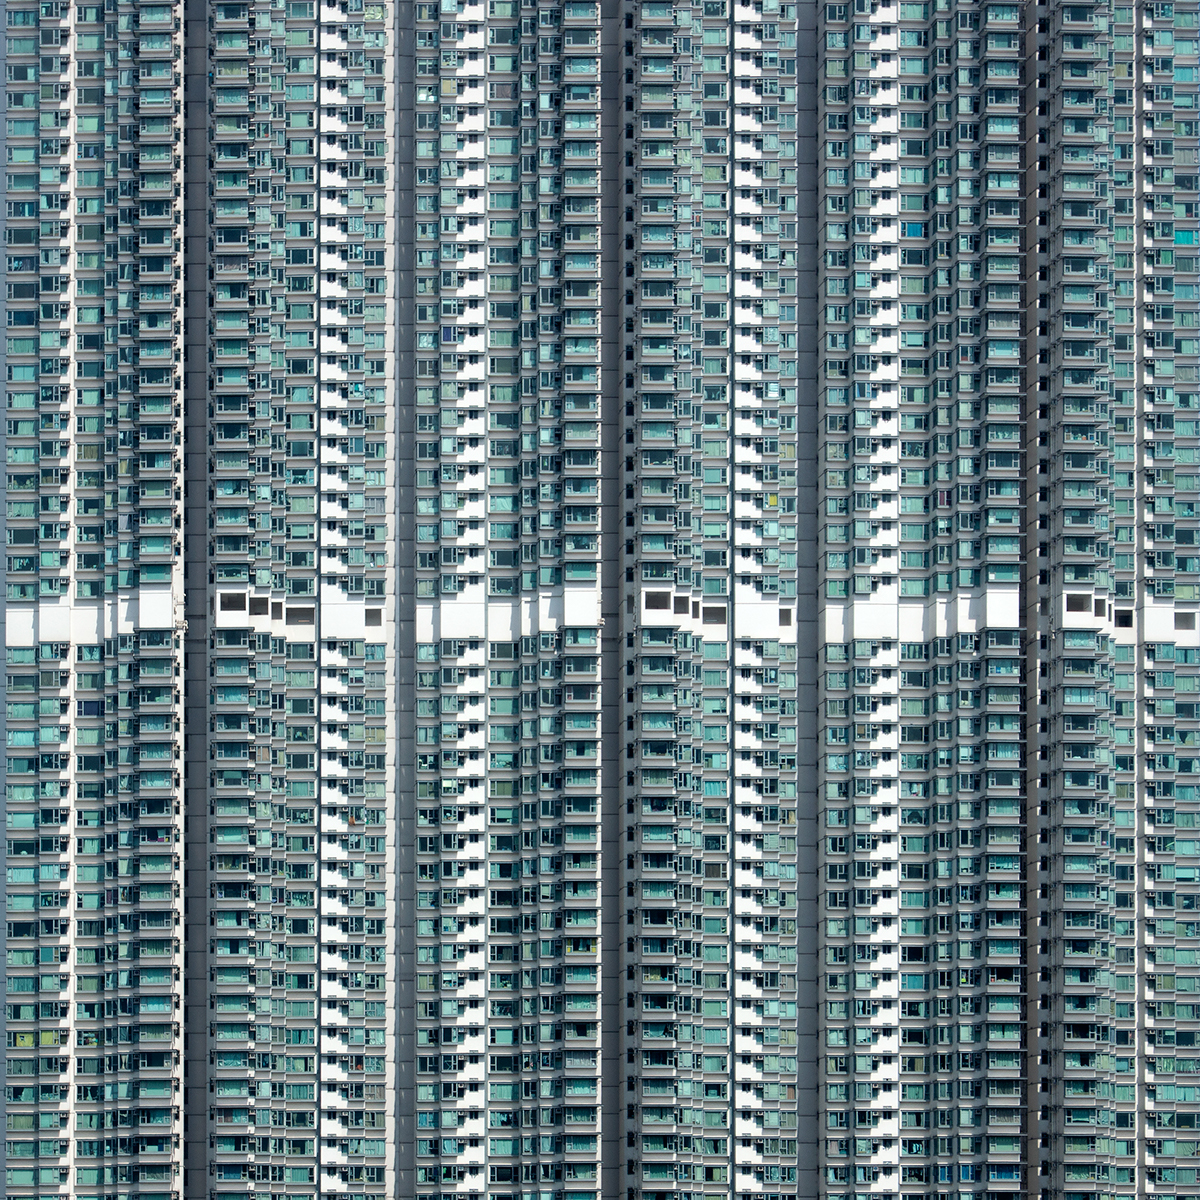 Adobe Portfolio Hong Kong buildings Urban Window windows building scyscraper scyscrapers  Patterns